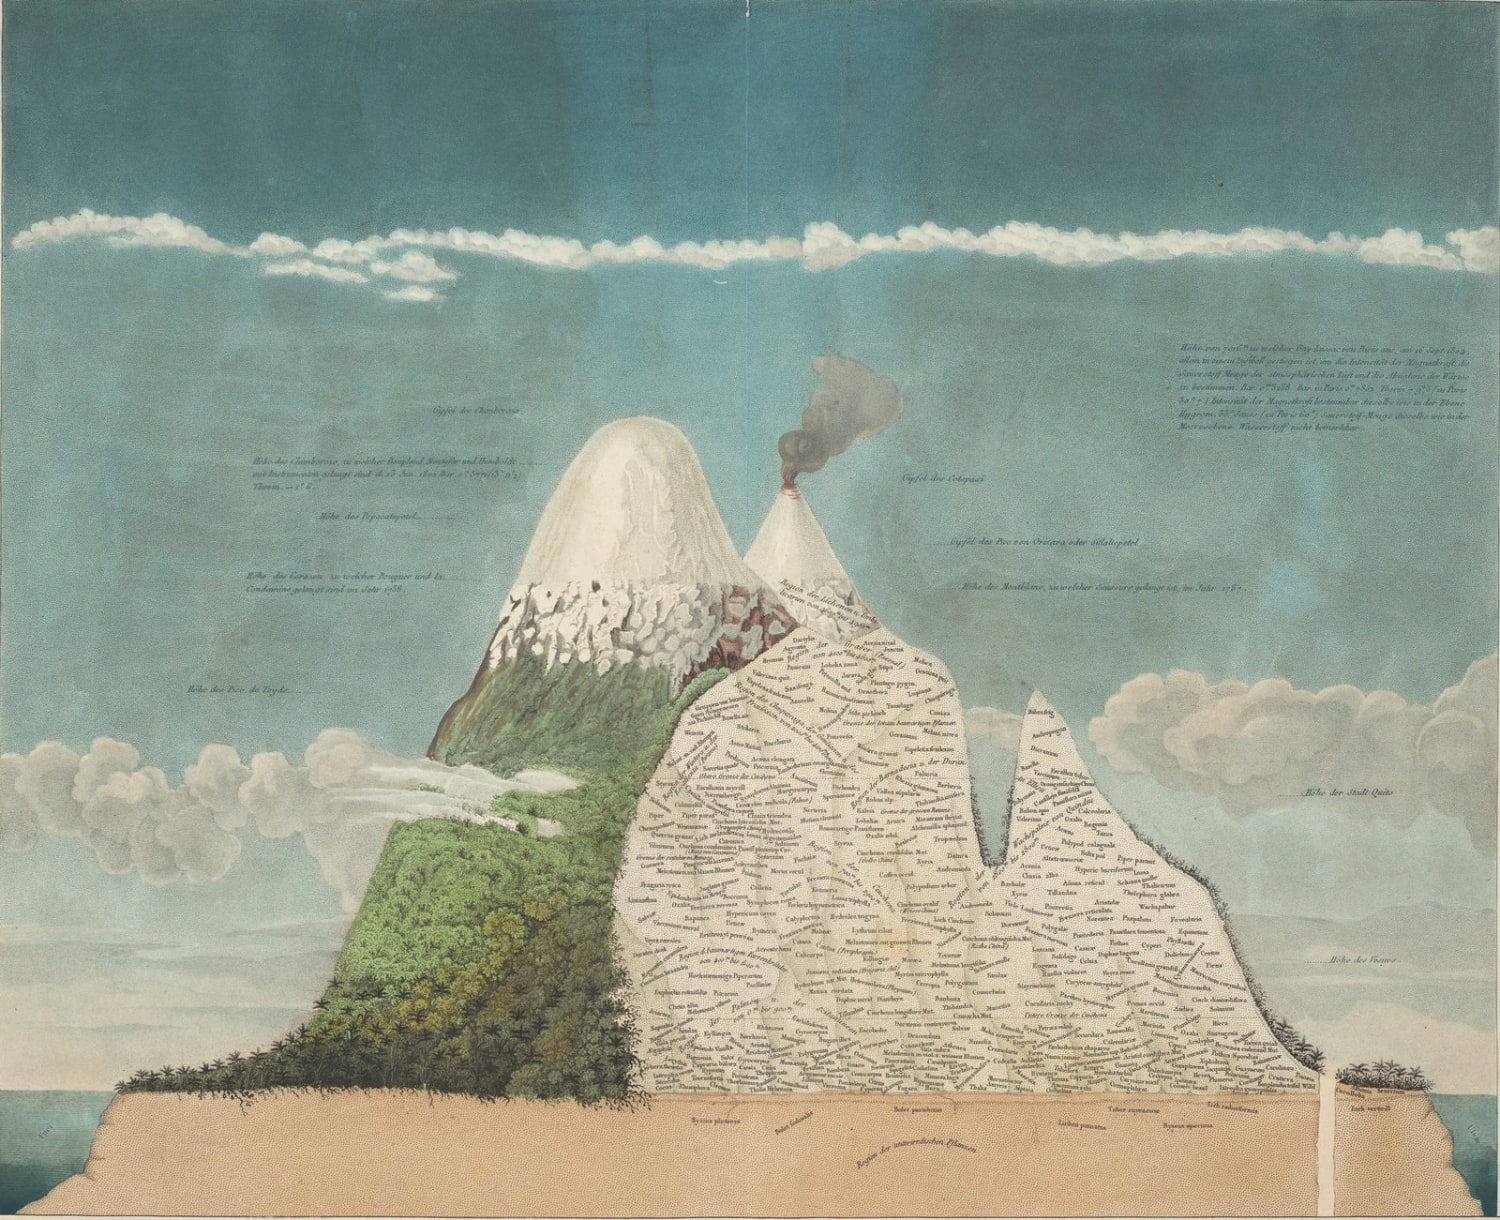 The Pioneering Maps of Alexander von Humboldt